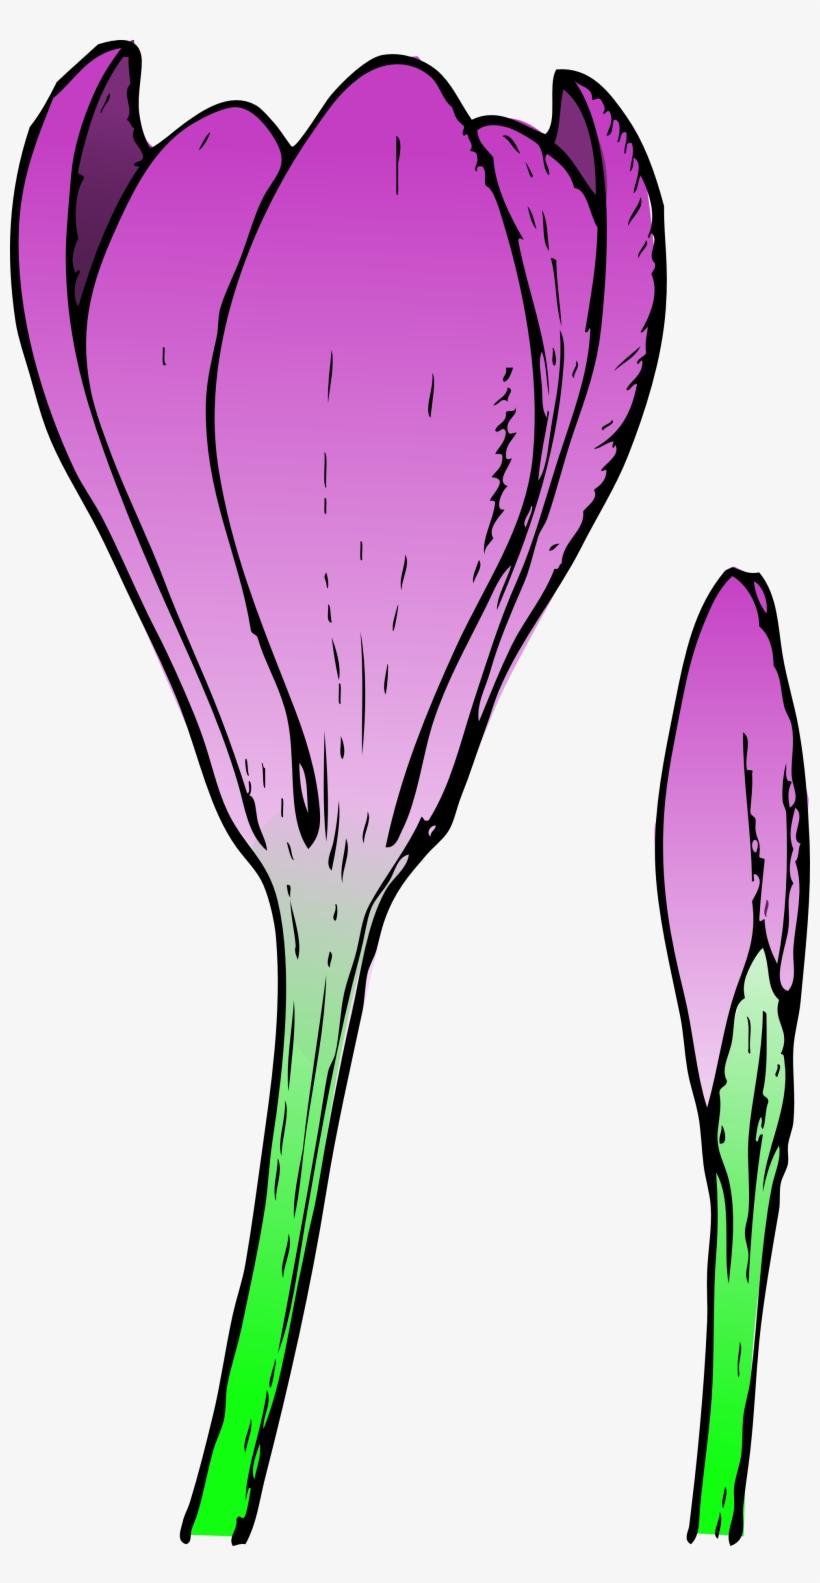 Crocus Flower And Bud Png - Crocus Flower, transparent png #375688